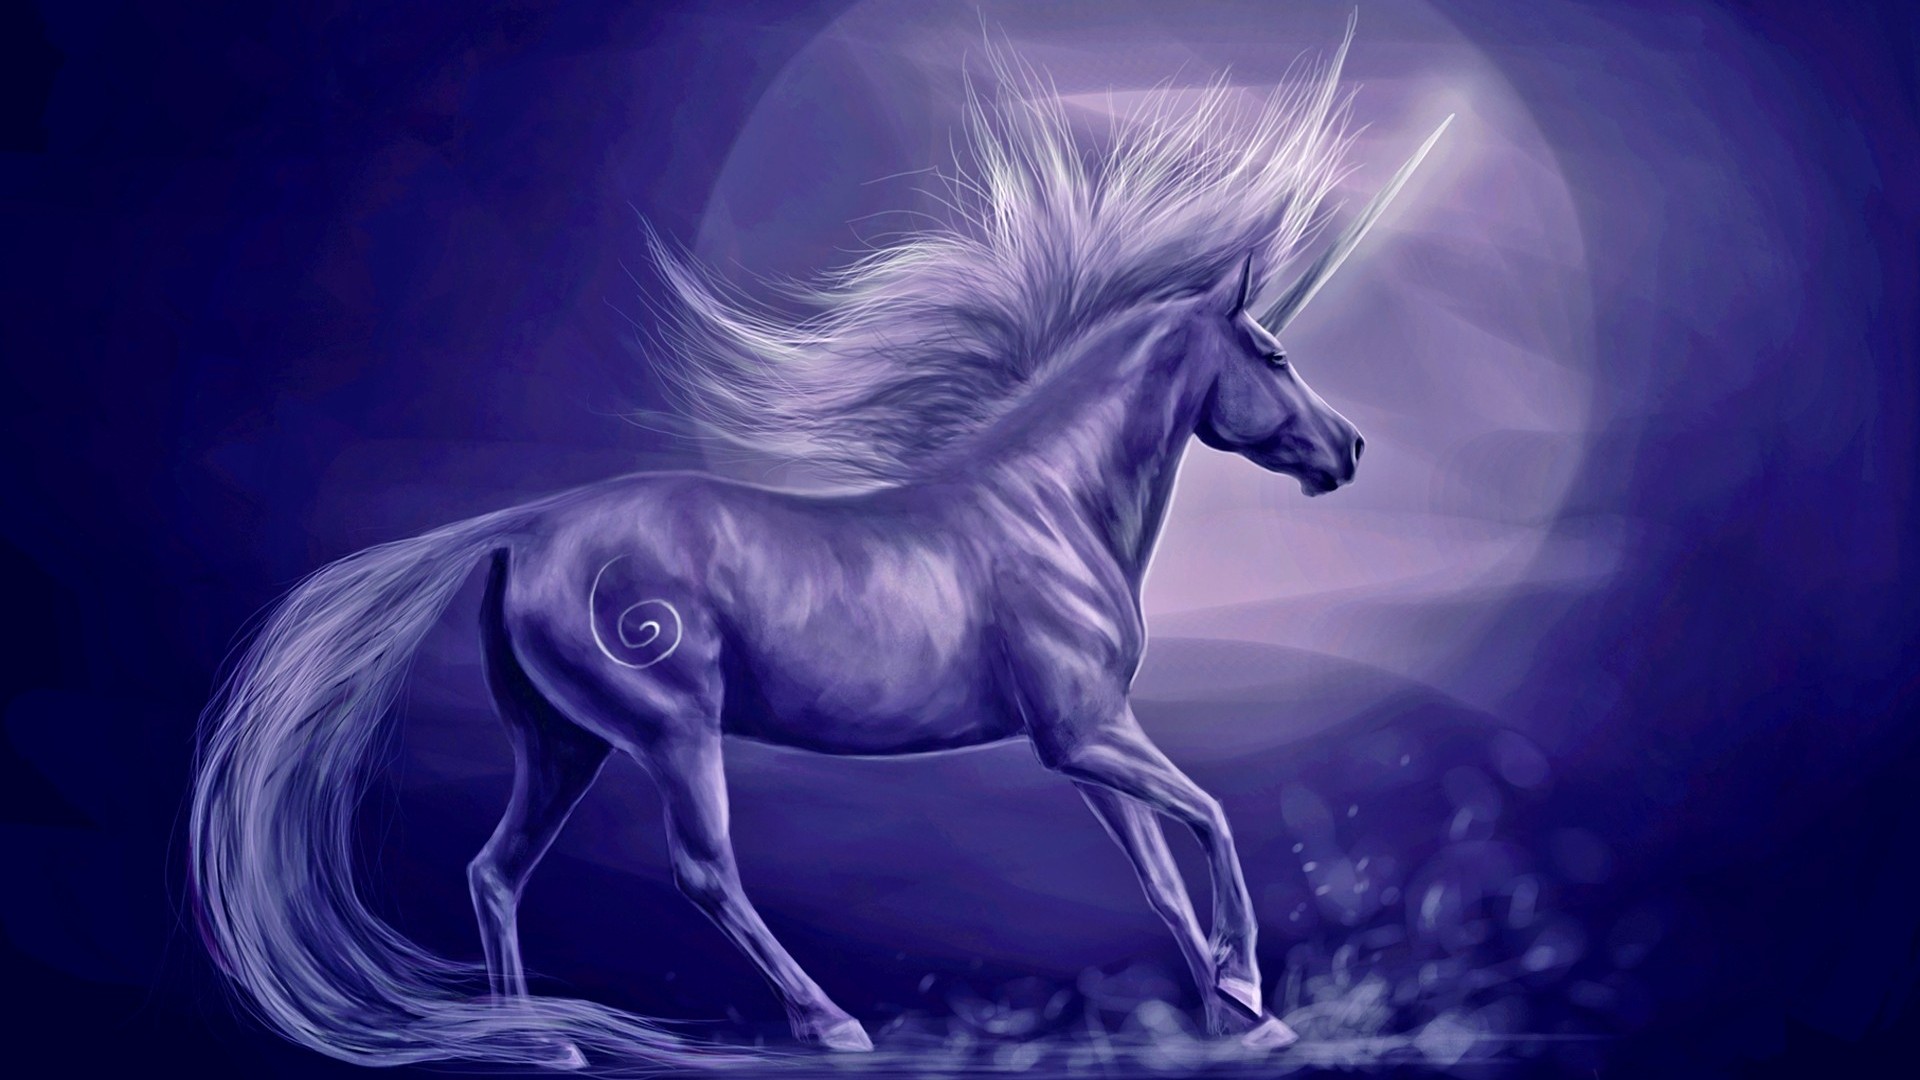 1920x1080 Unicorn-1080p-Background-http-and-backgrounds-net-unicorn-